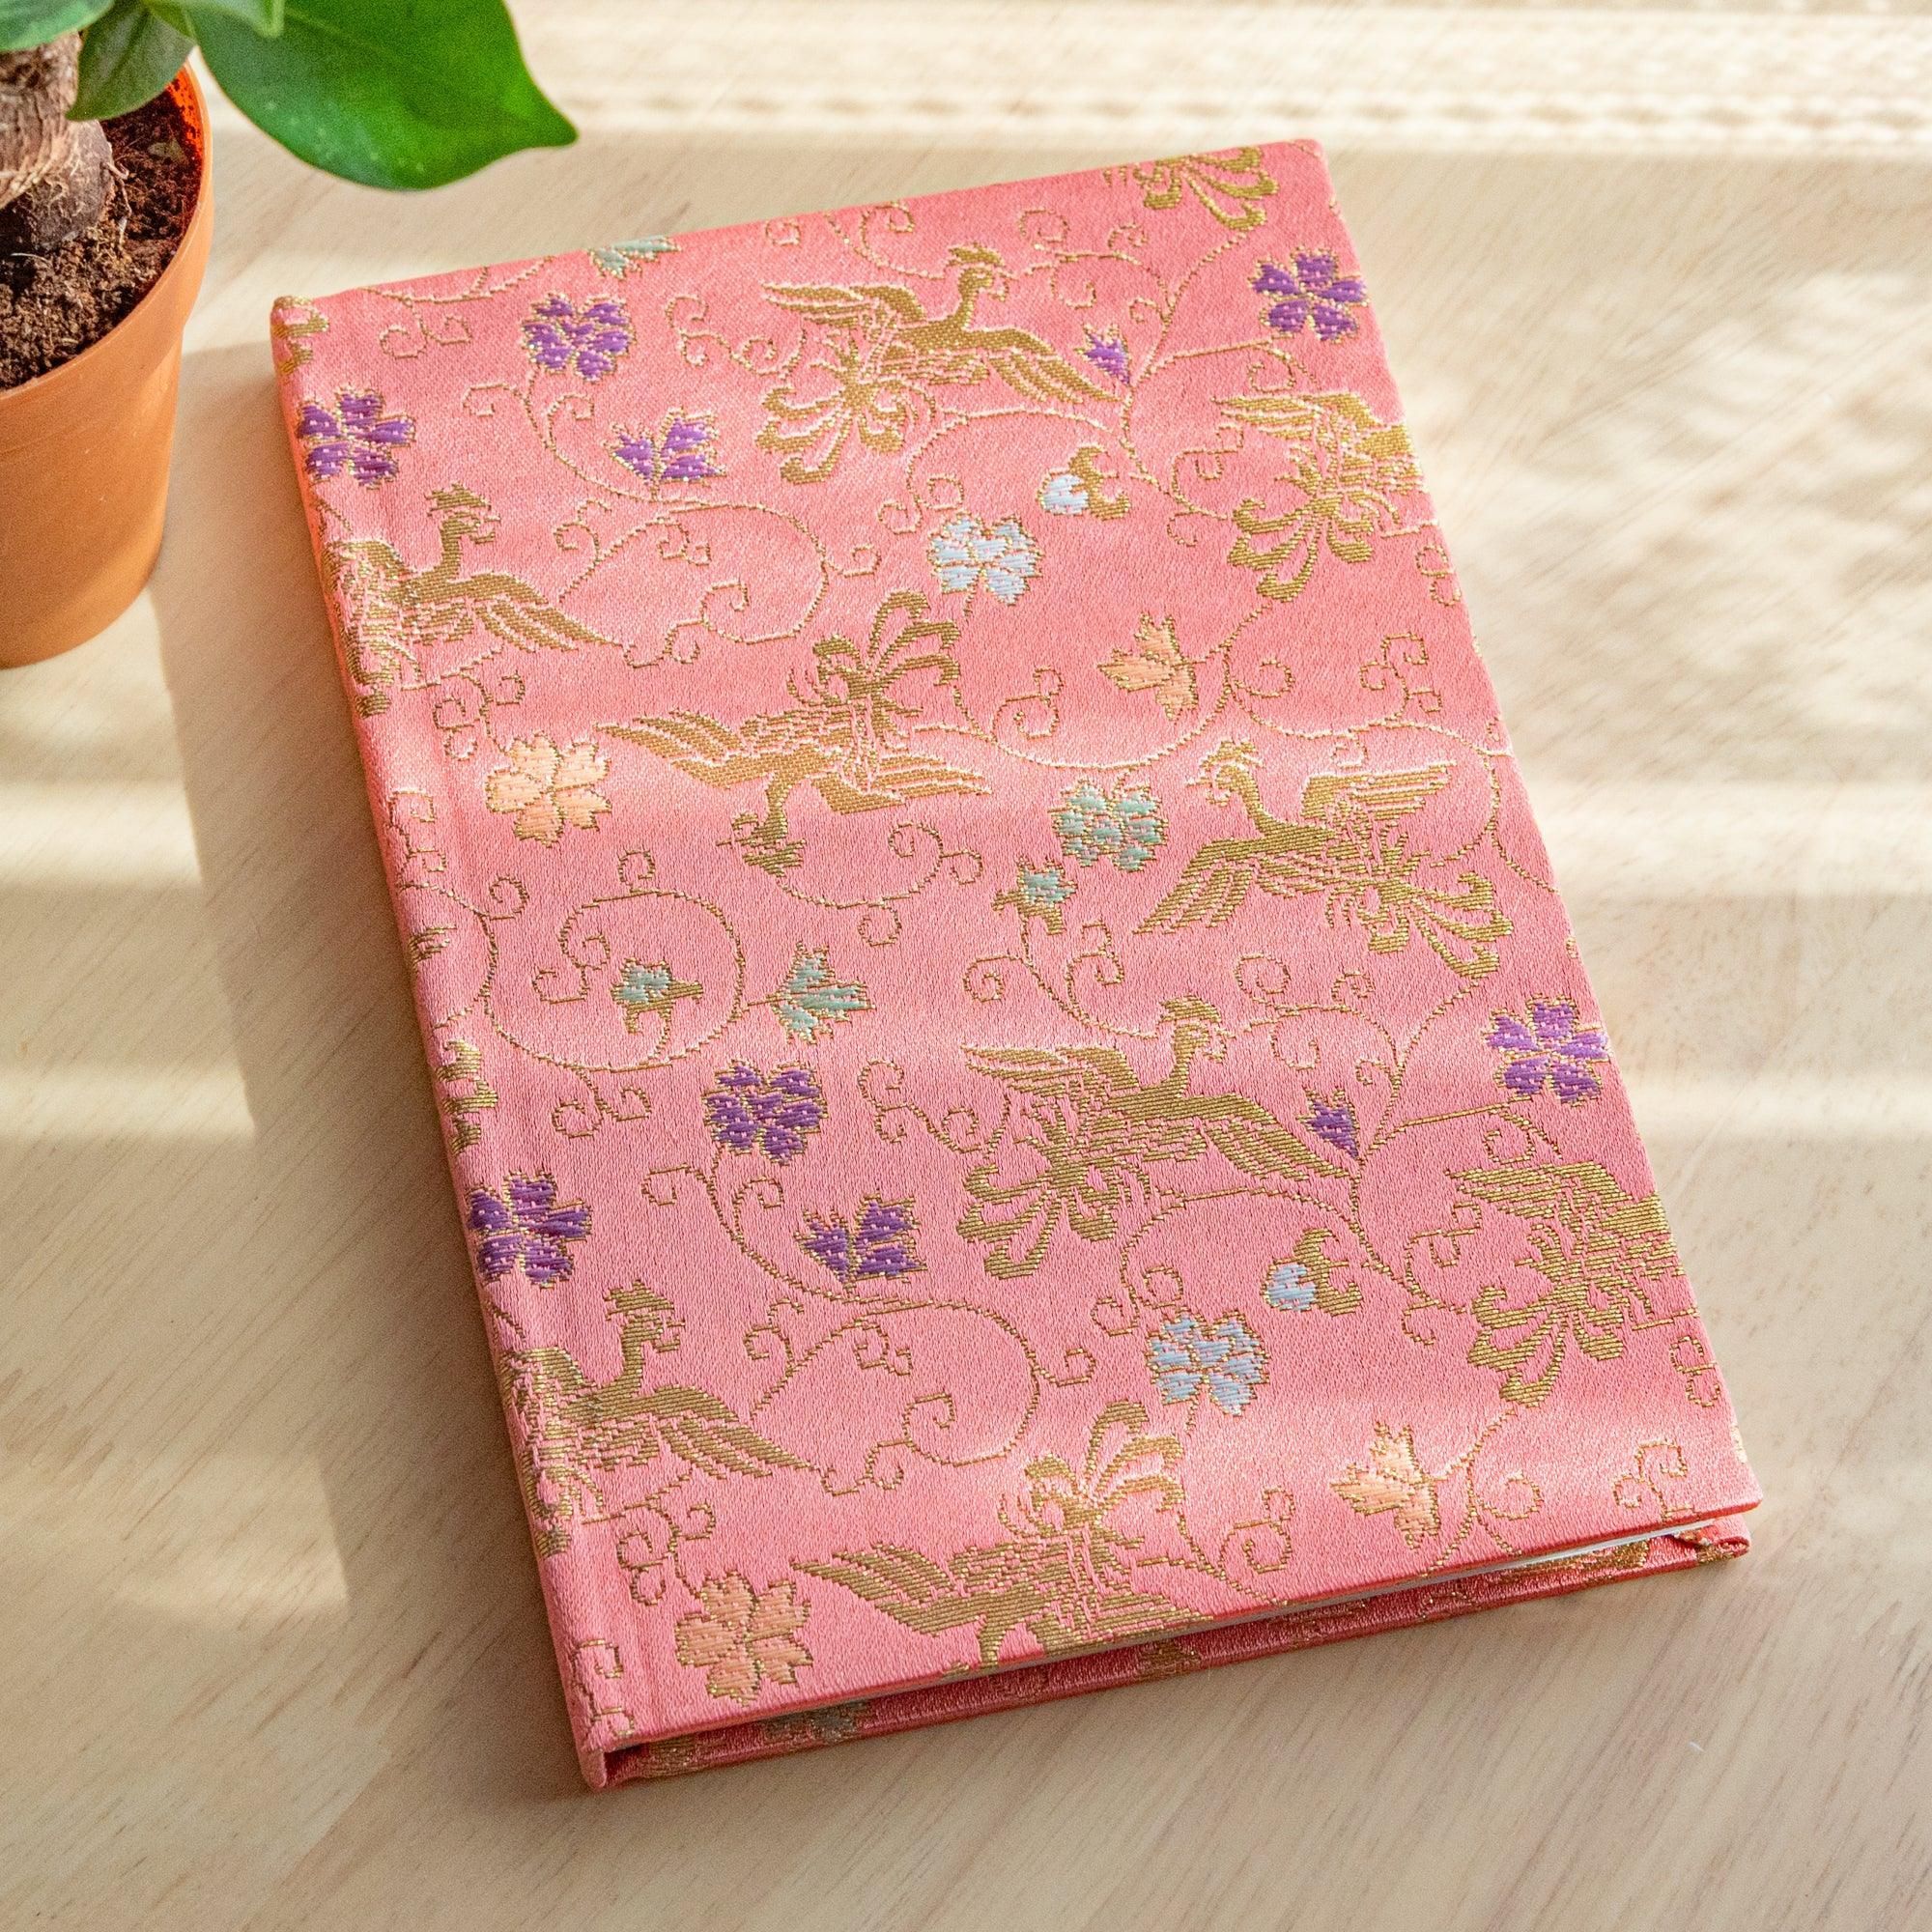 nishijin-textile-golden-phoenix-and-arabesque-pink-notebook-or-b6-morisan-komorebi-stationery-1 - Komorebi Stationery